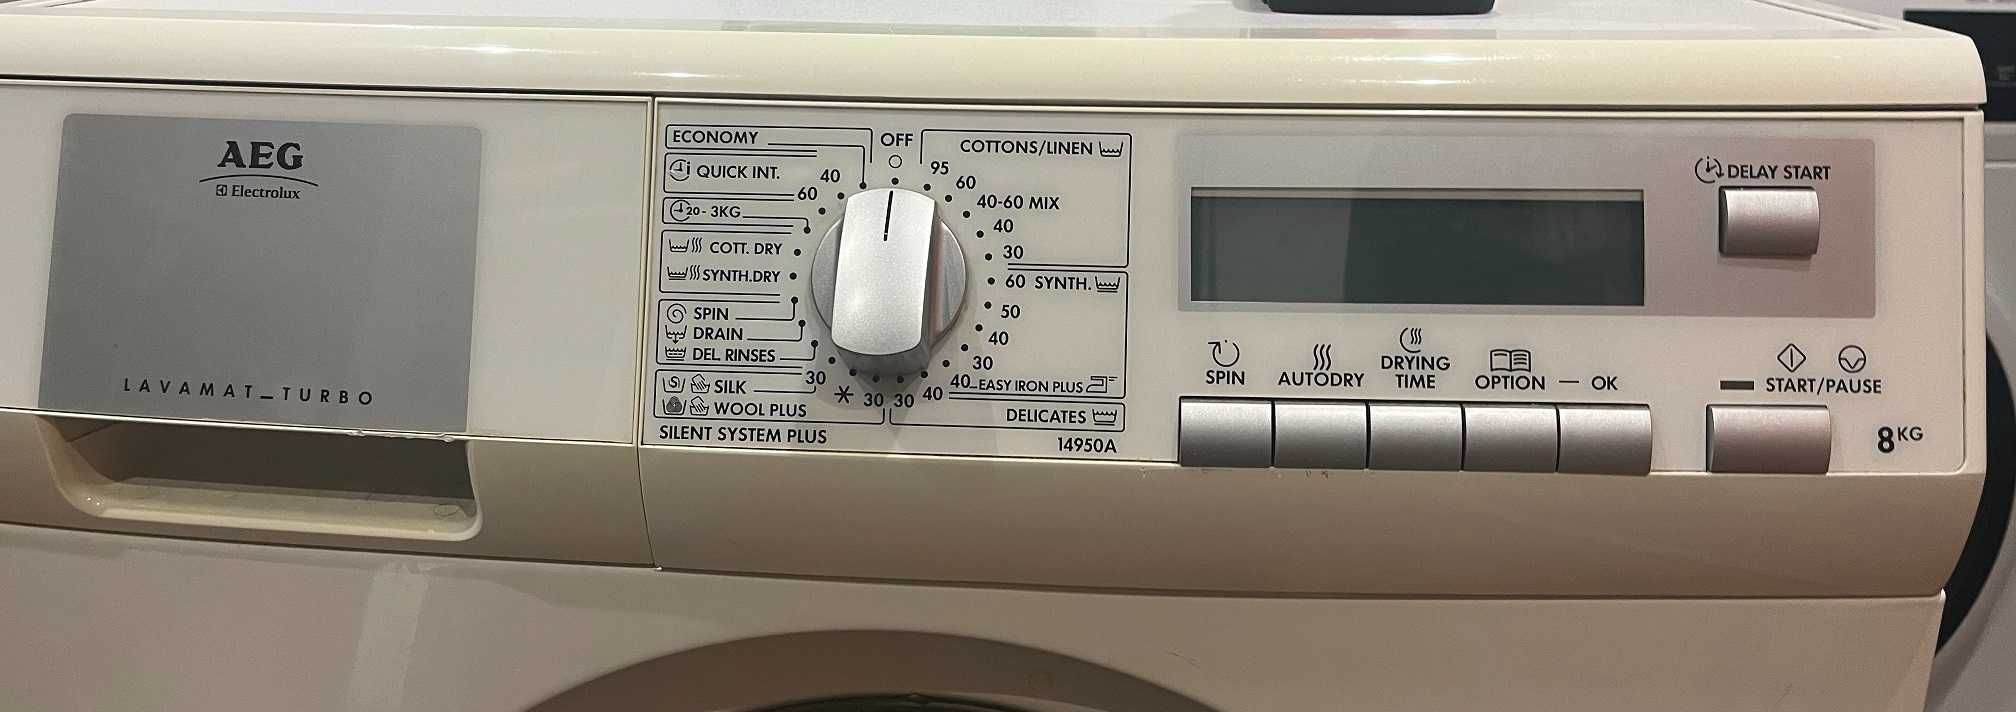 Maquina de Lavar e Secar AEG 14950A